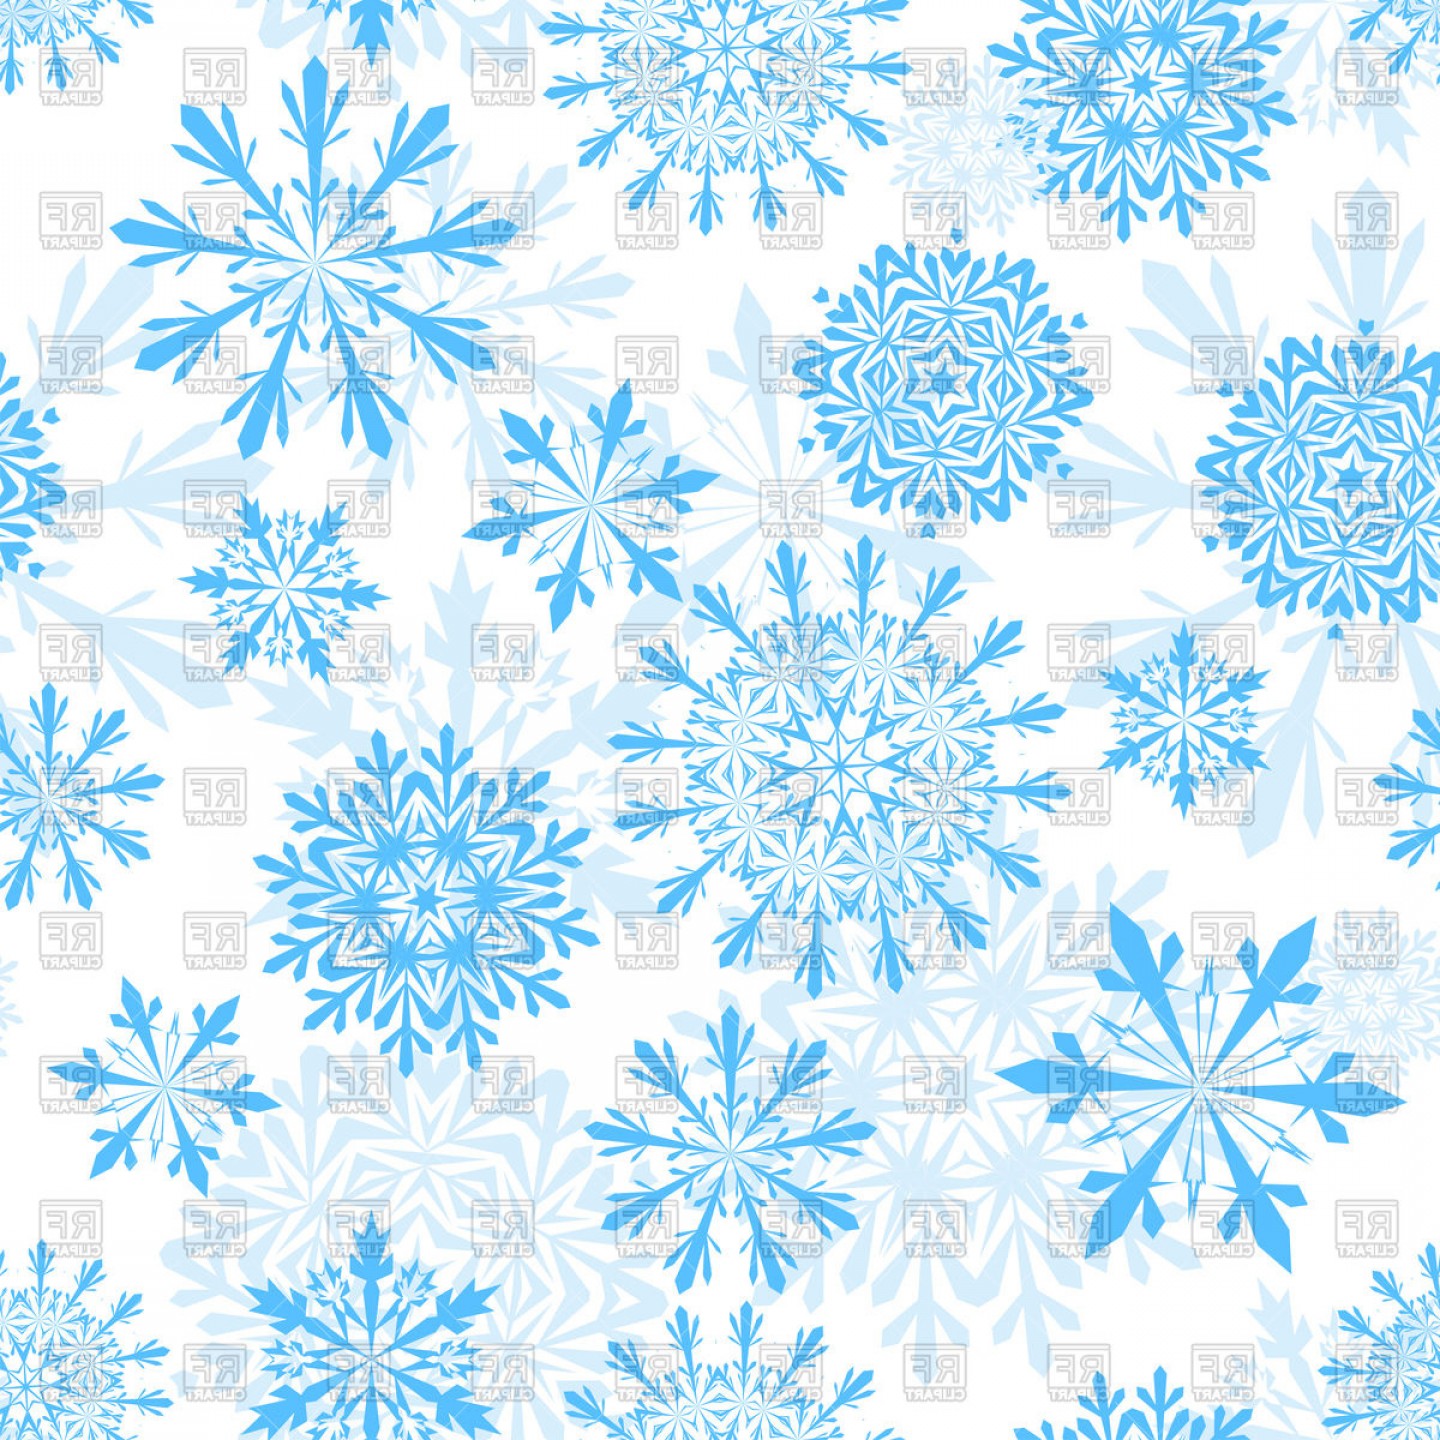 Free snowflake background.